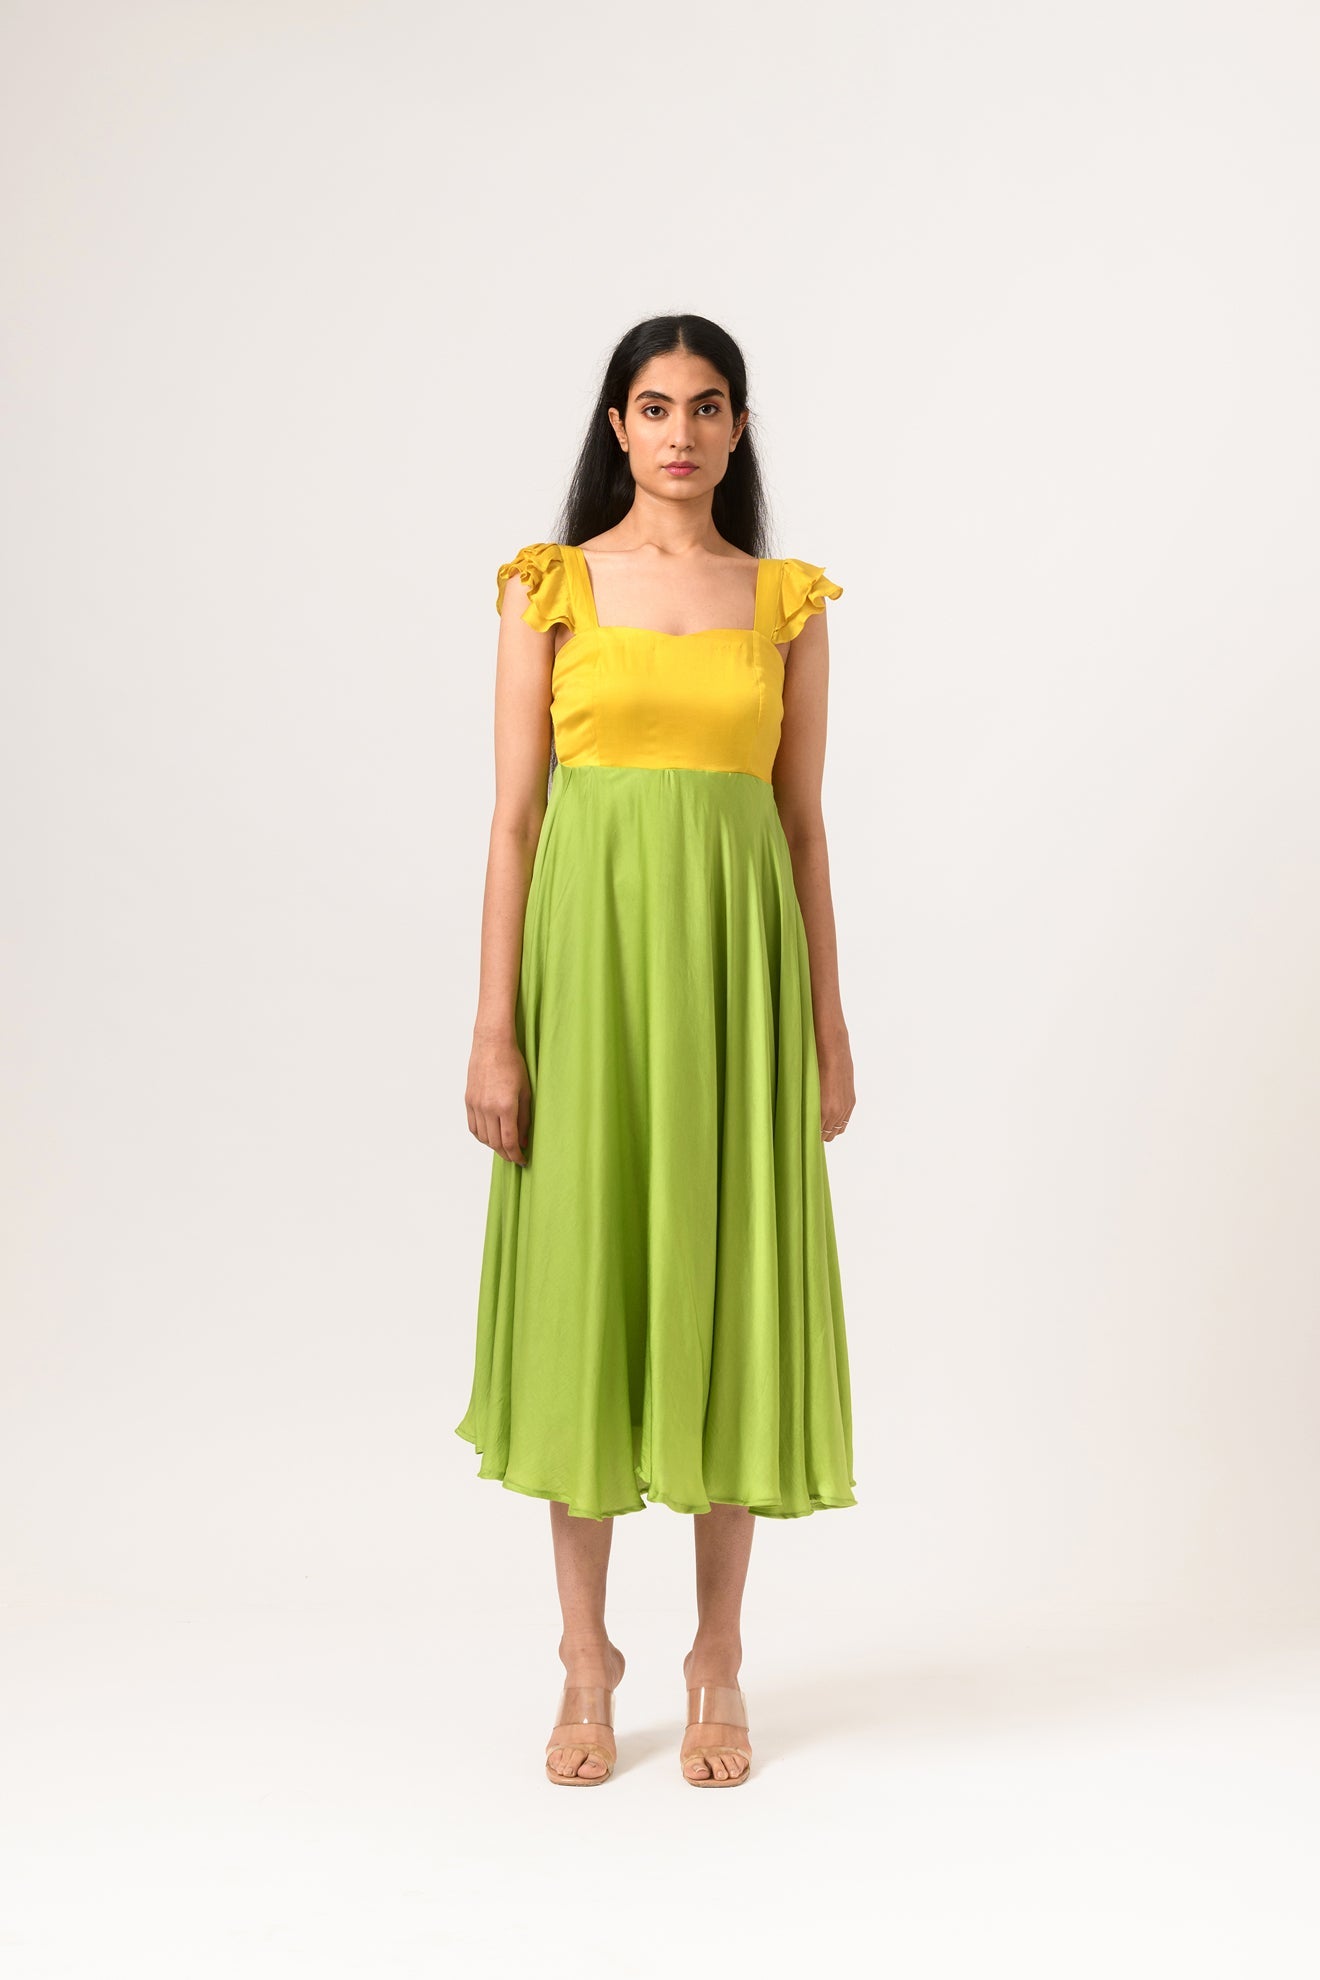 Buy Yellow Cold-Shoulder Maxi Dress Online - Label Ritu Kumar India Store  View